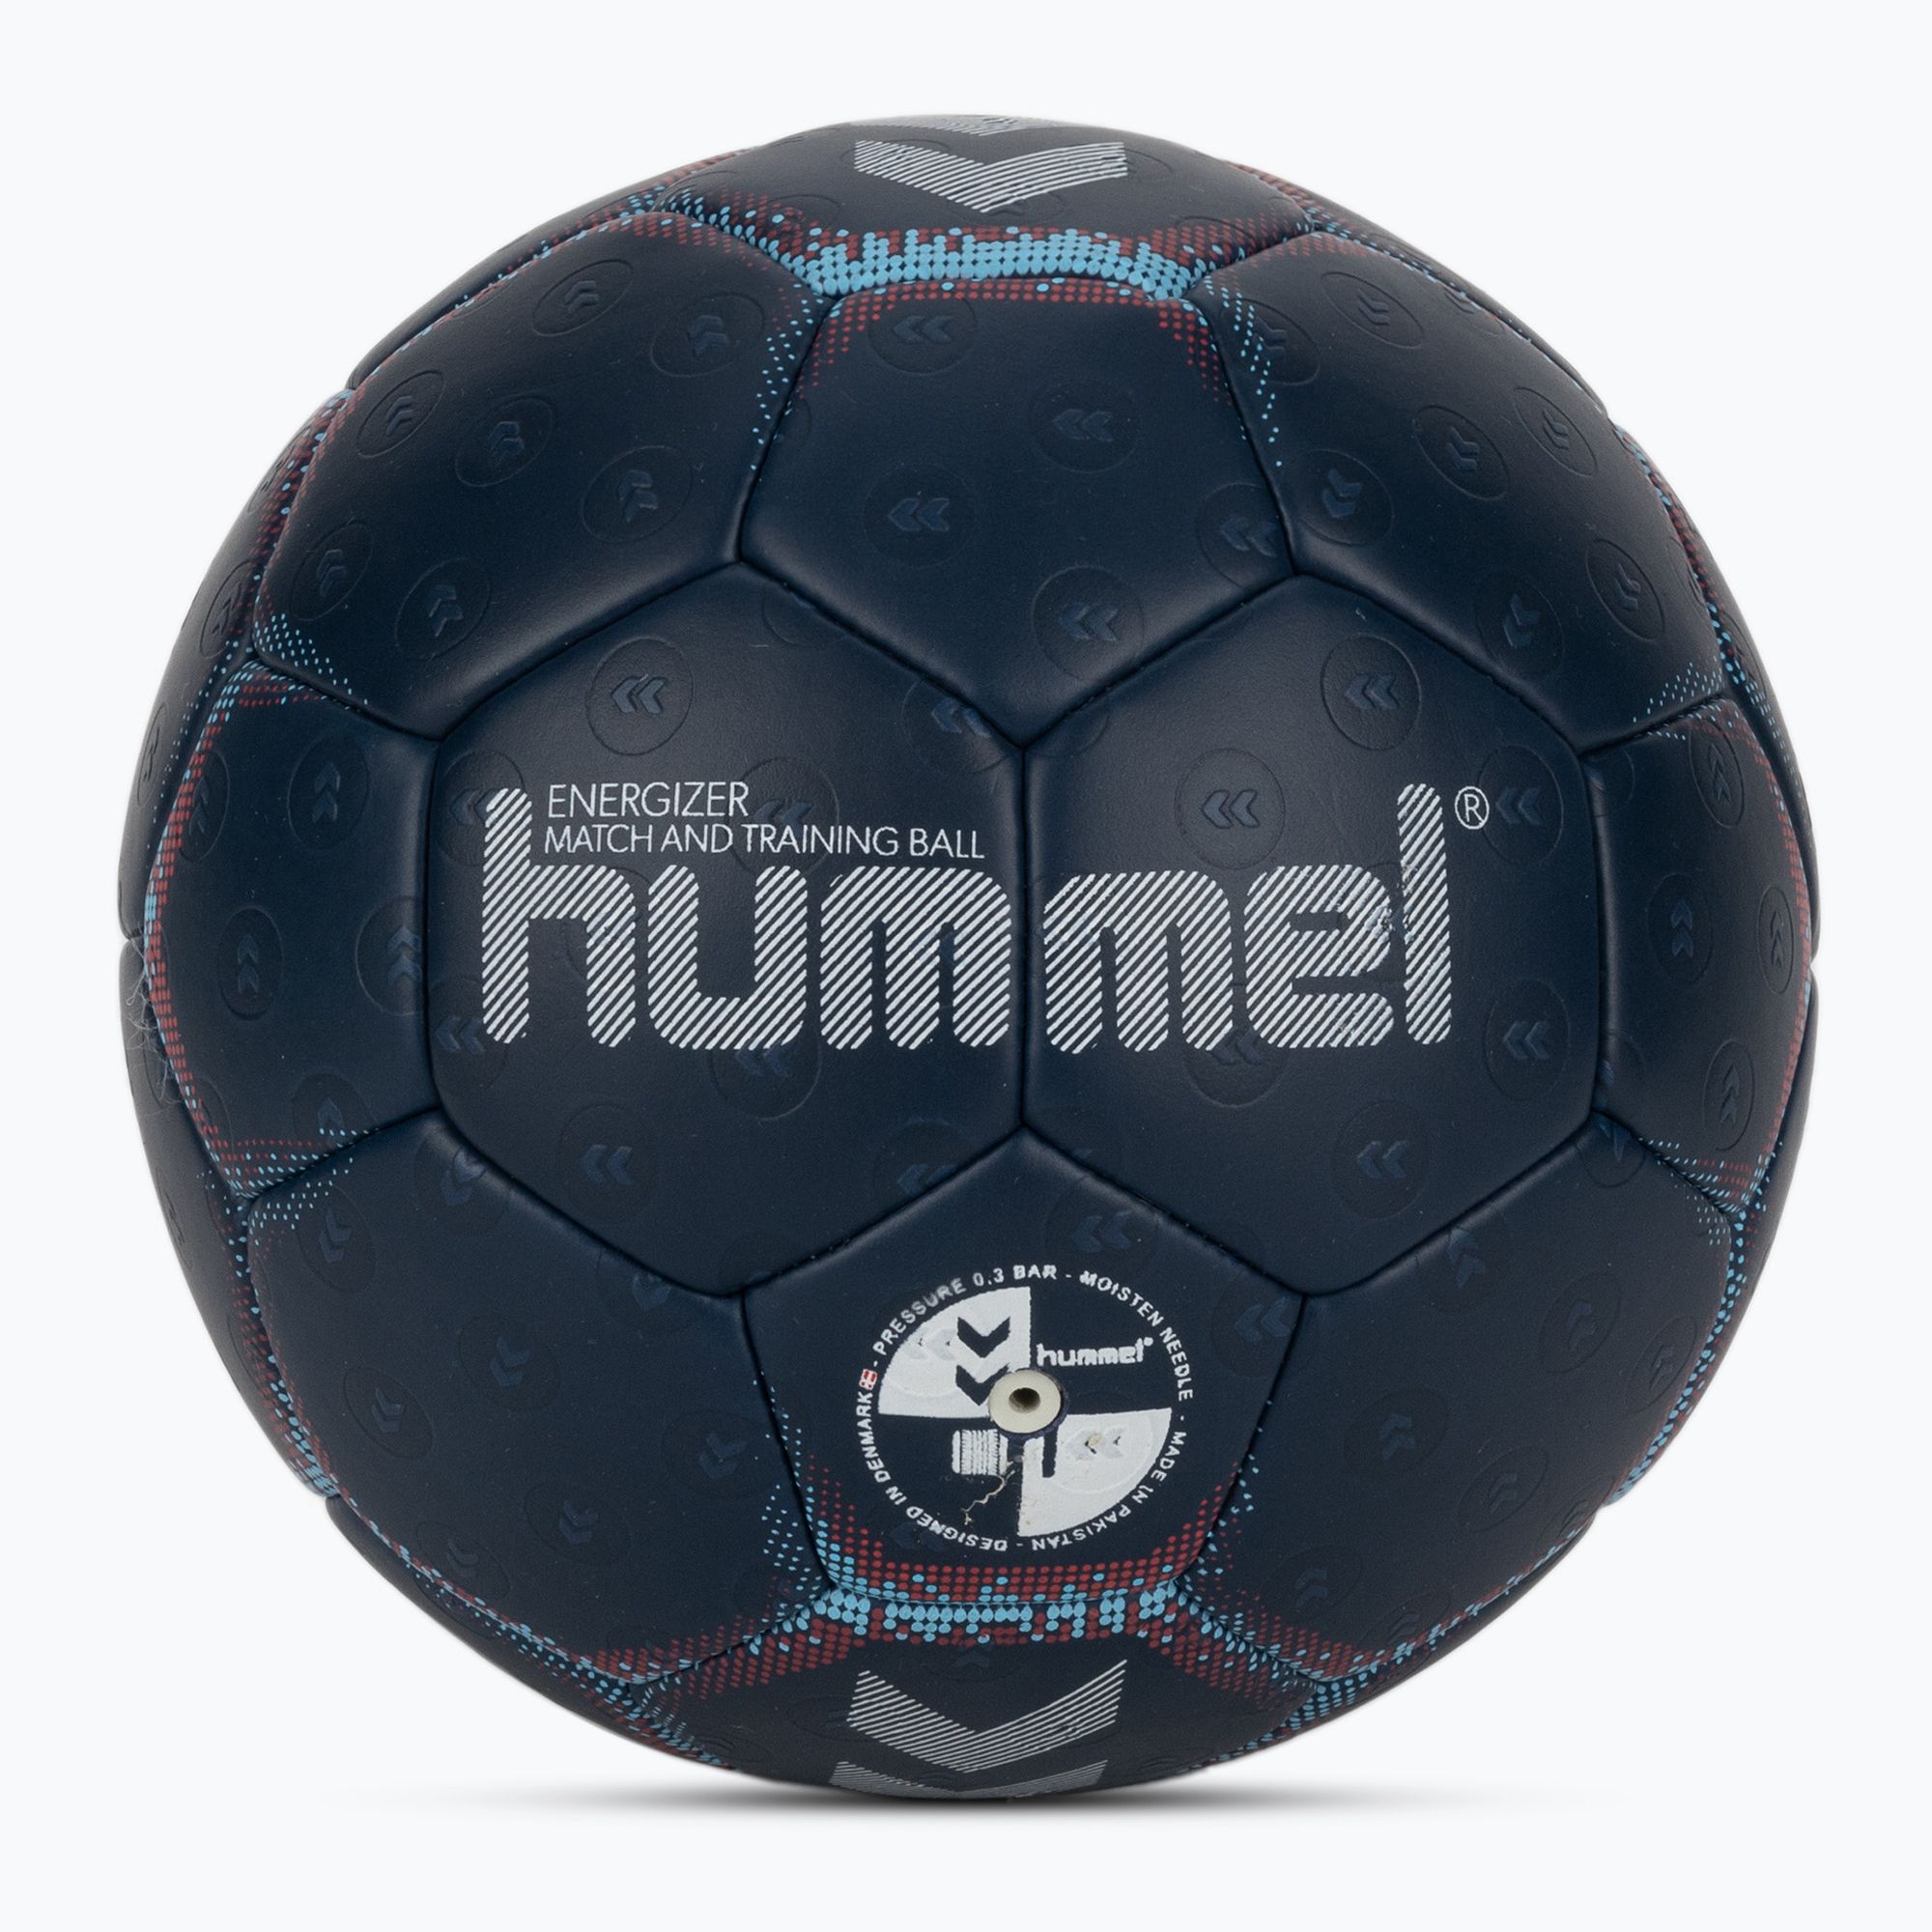 Hummel Energizer HB handball marine/white/red 1 size